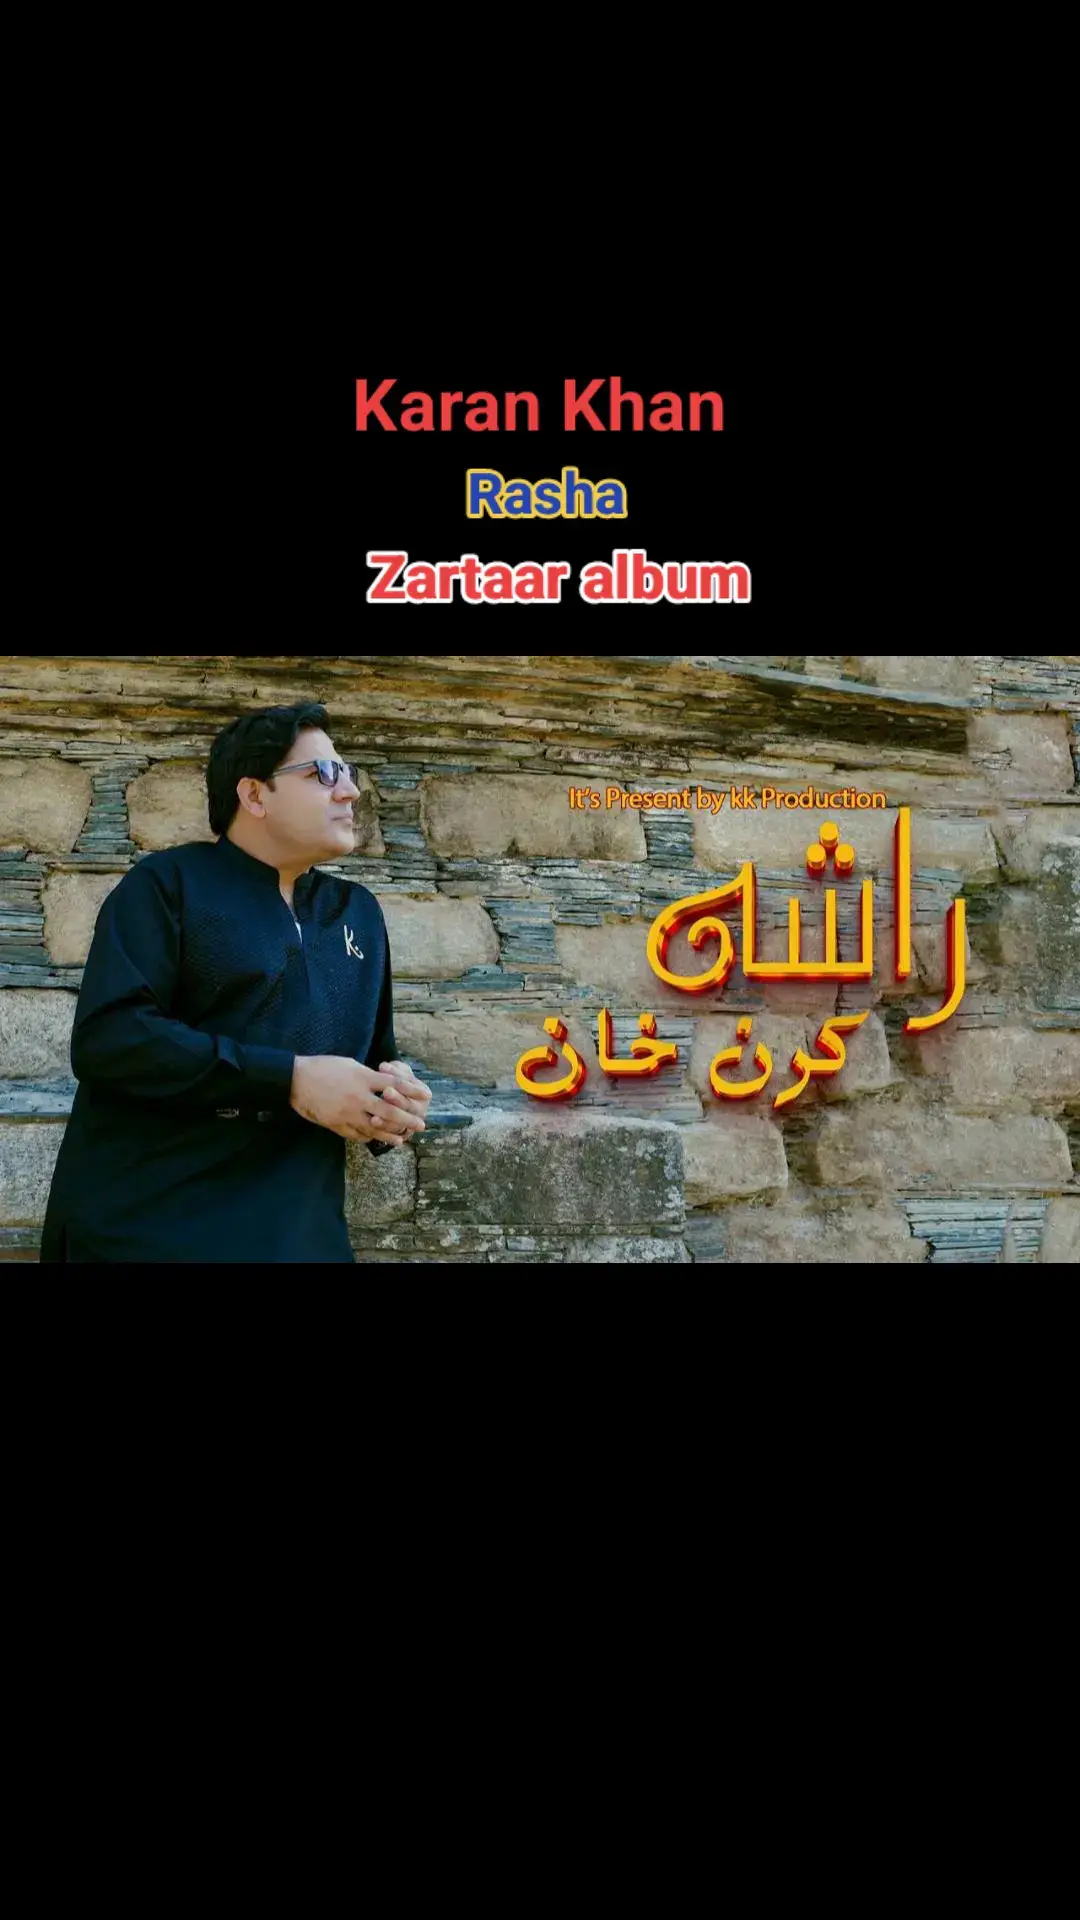 Zartaar album 🌹🥰 trending Karan Khan #karankhan #zartaar #karankhanmusic #trending #mazegar #qawali #reel #Baran #😭😭😭😭😭😭💔💔💔💔 